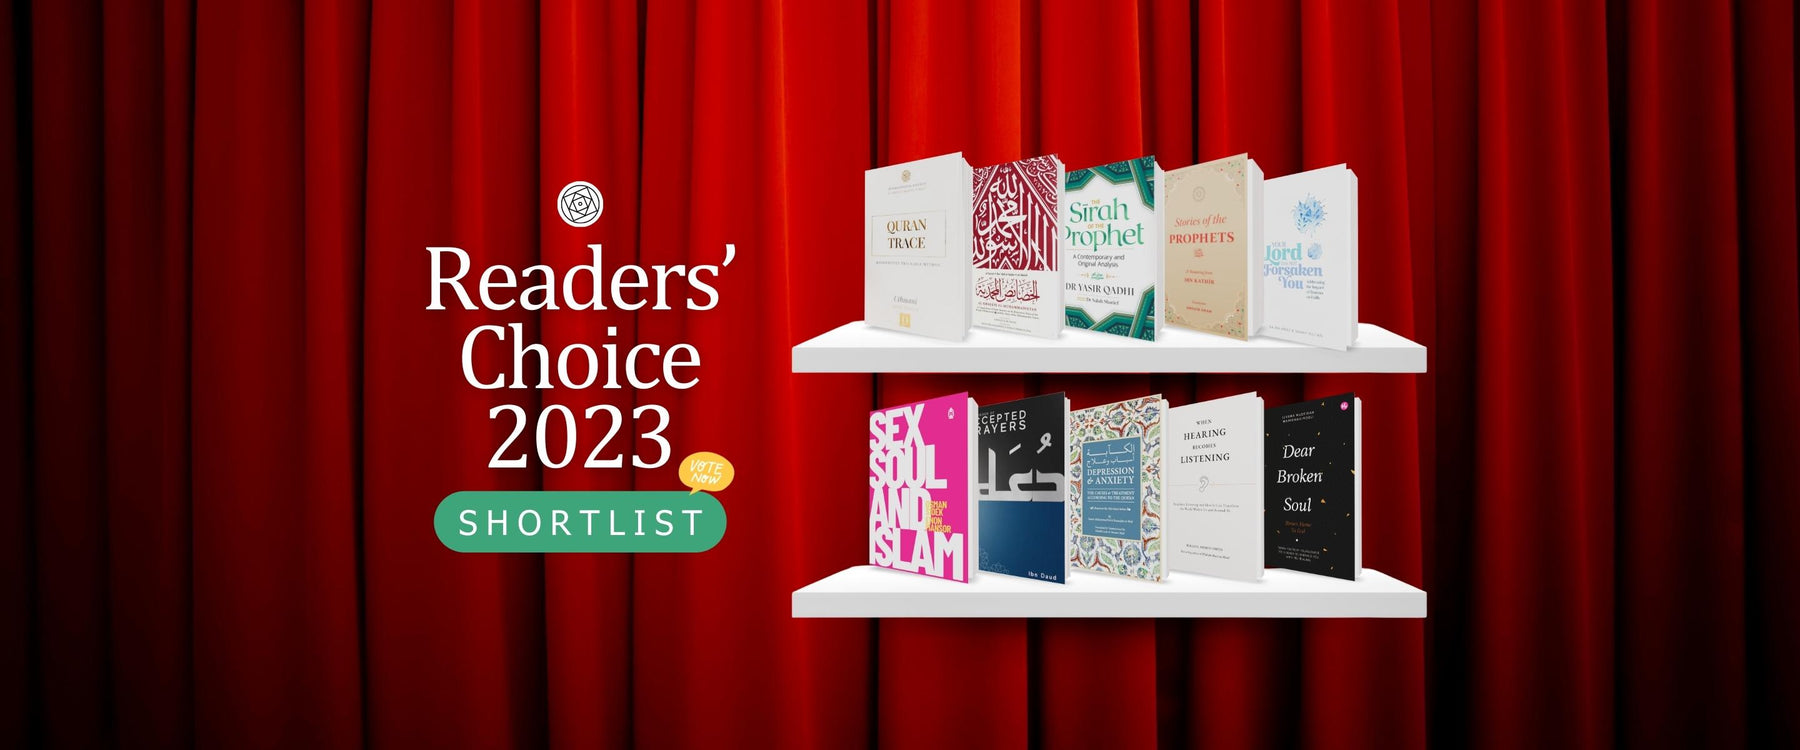 Readers’ Choice 2023 Shortlist